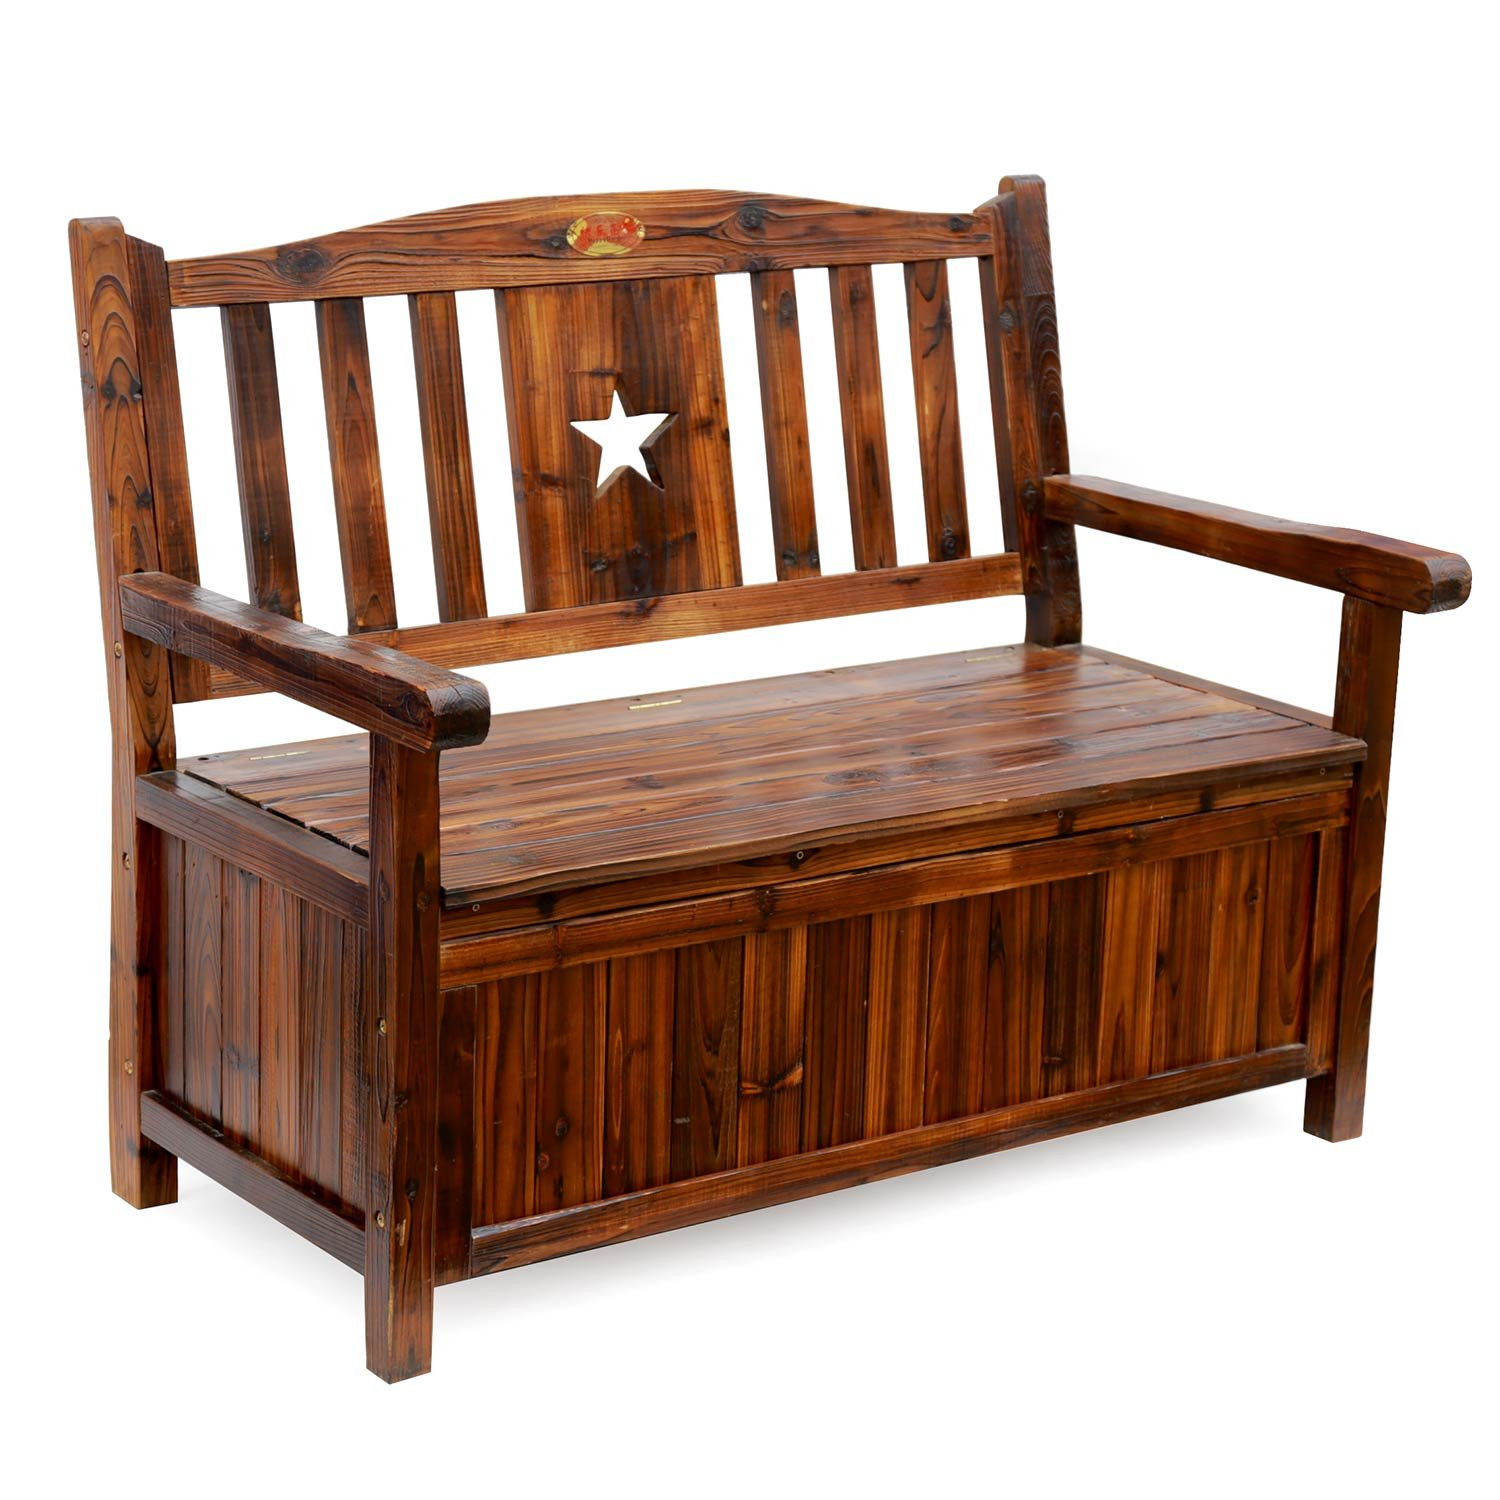 Wooden Storage Benches Indoor
 Best Rated in Outdoor Storage Benches & Helpful Customer